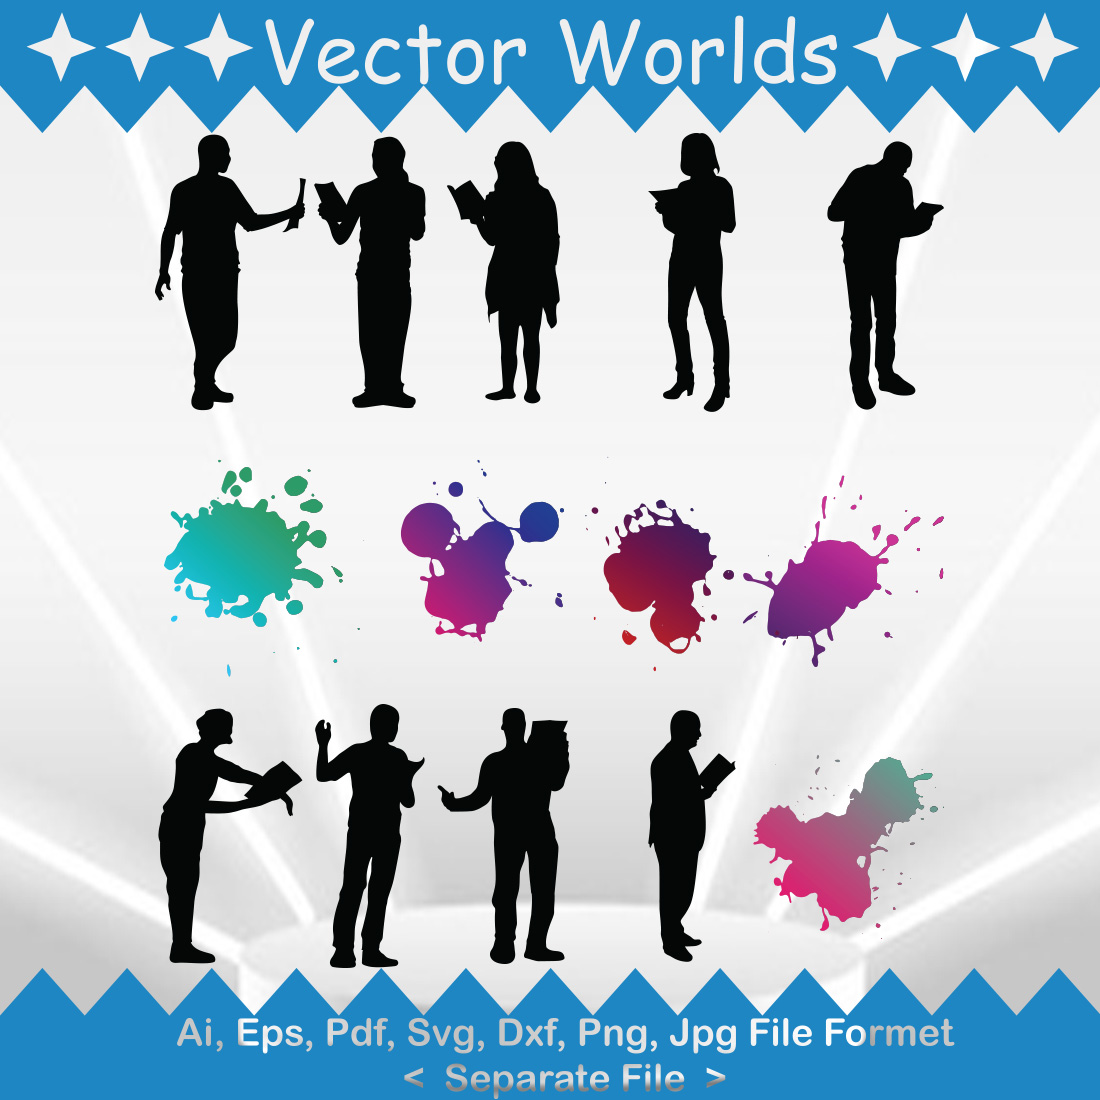 Artist SVG Vector Design cover image.